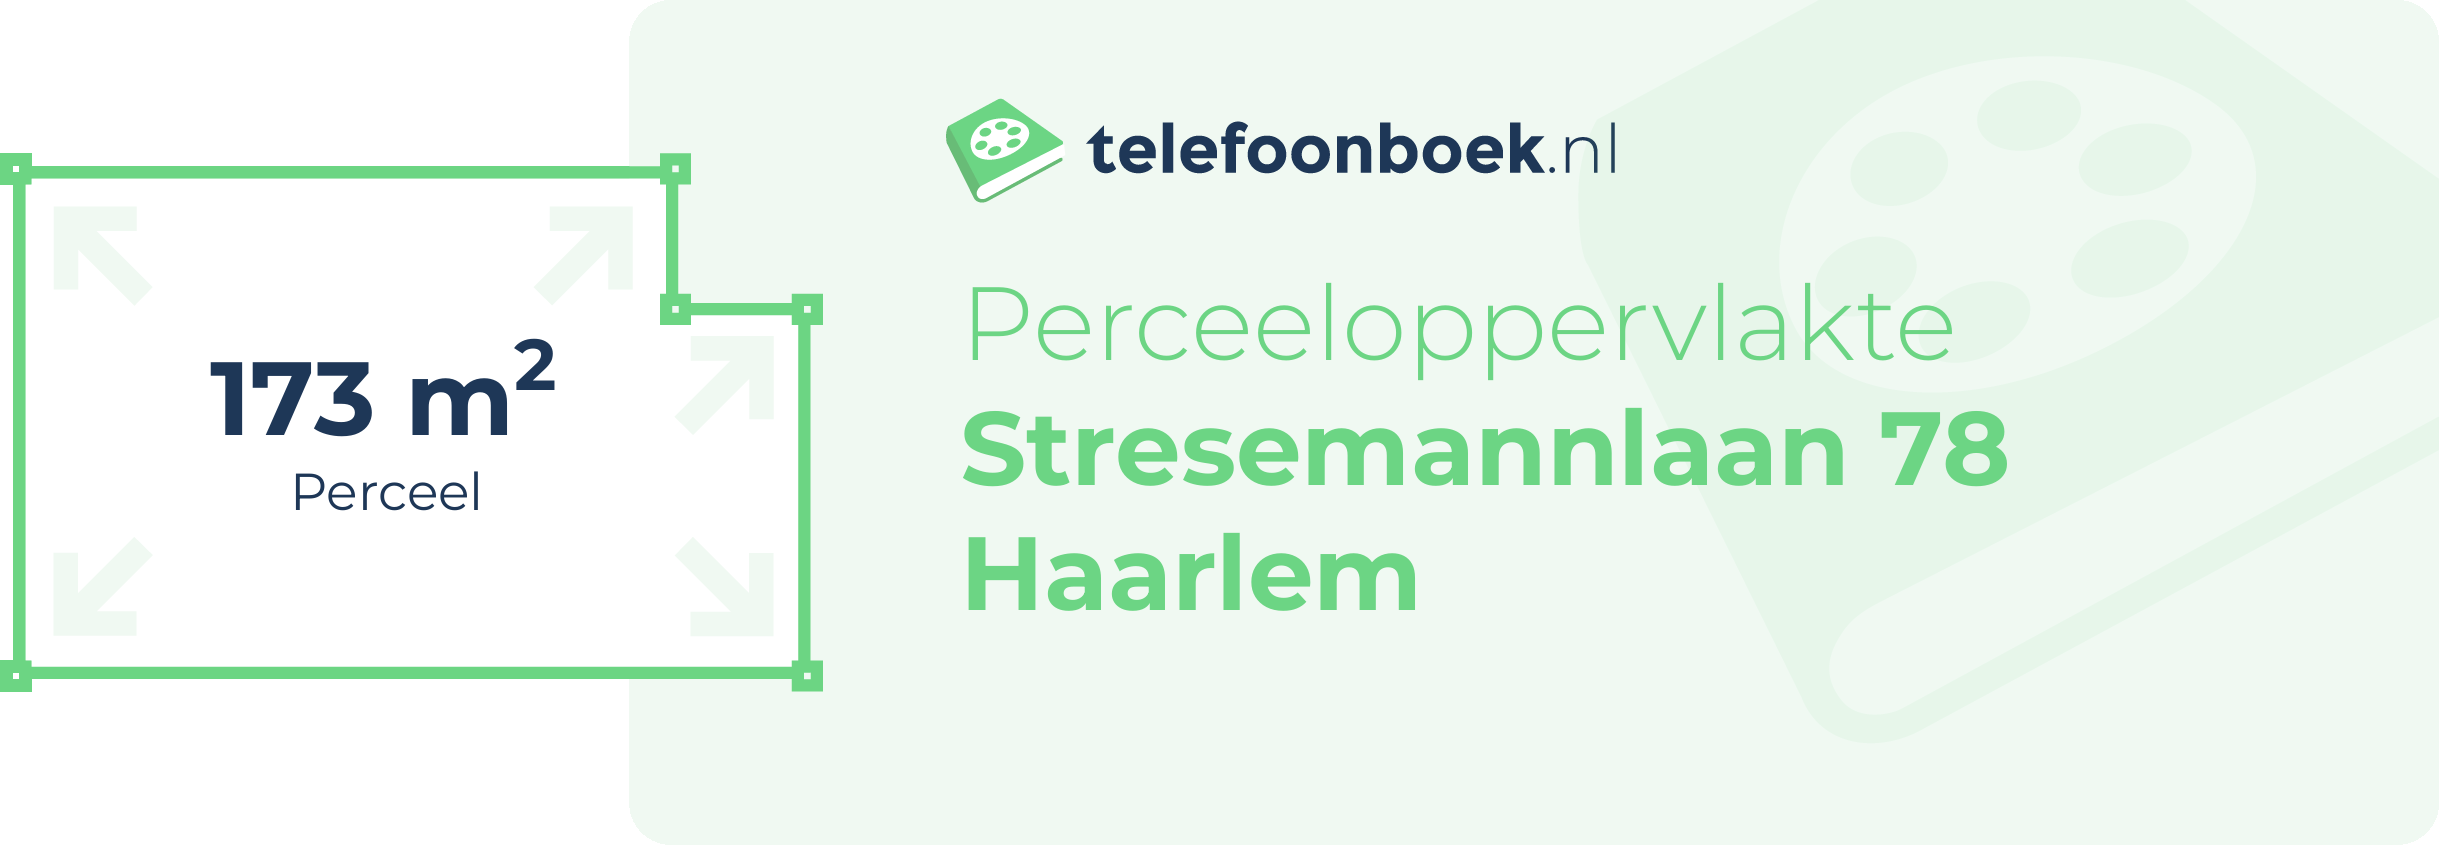 Perceeloppervlakte Stresemannlaan 78 Haarlem